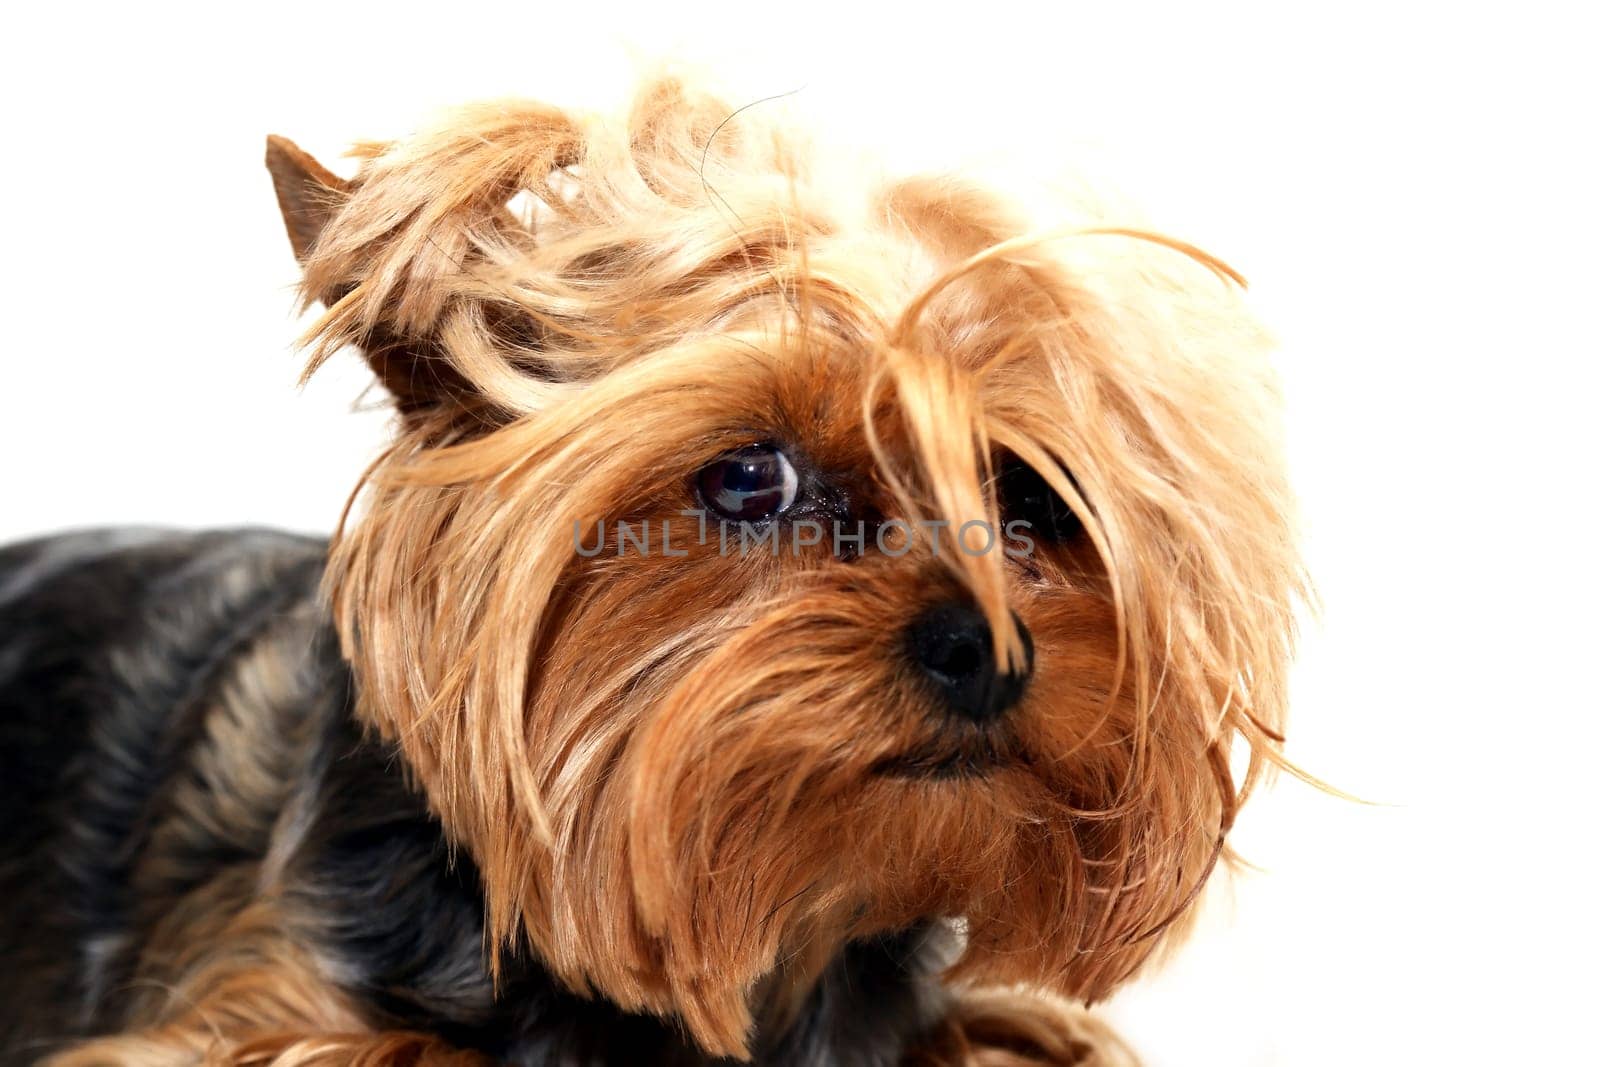 A little scared yorkshire terrier fun face portrait